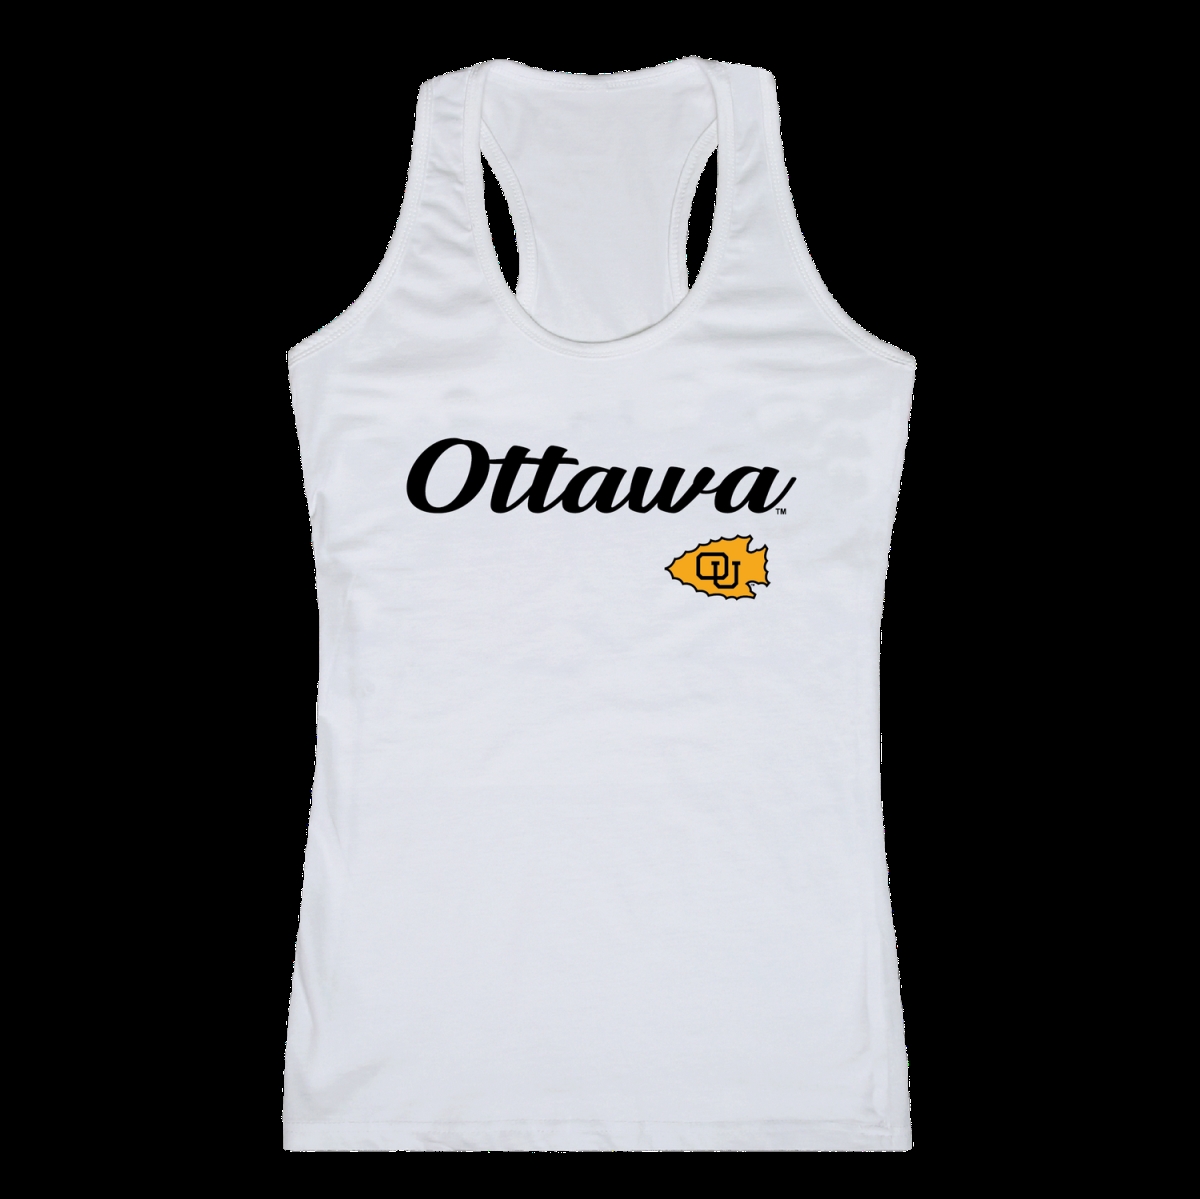 W Republic 557-253-WHT-03 University of Ottawa Braves Script Tank Top&#44; White - Large